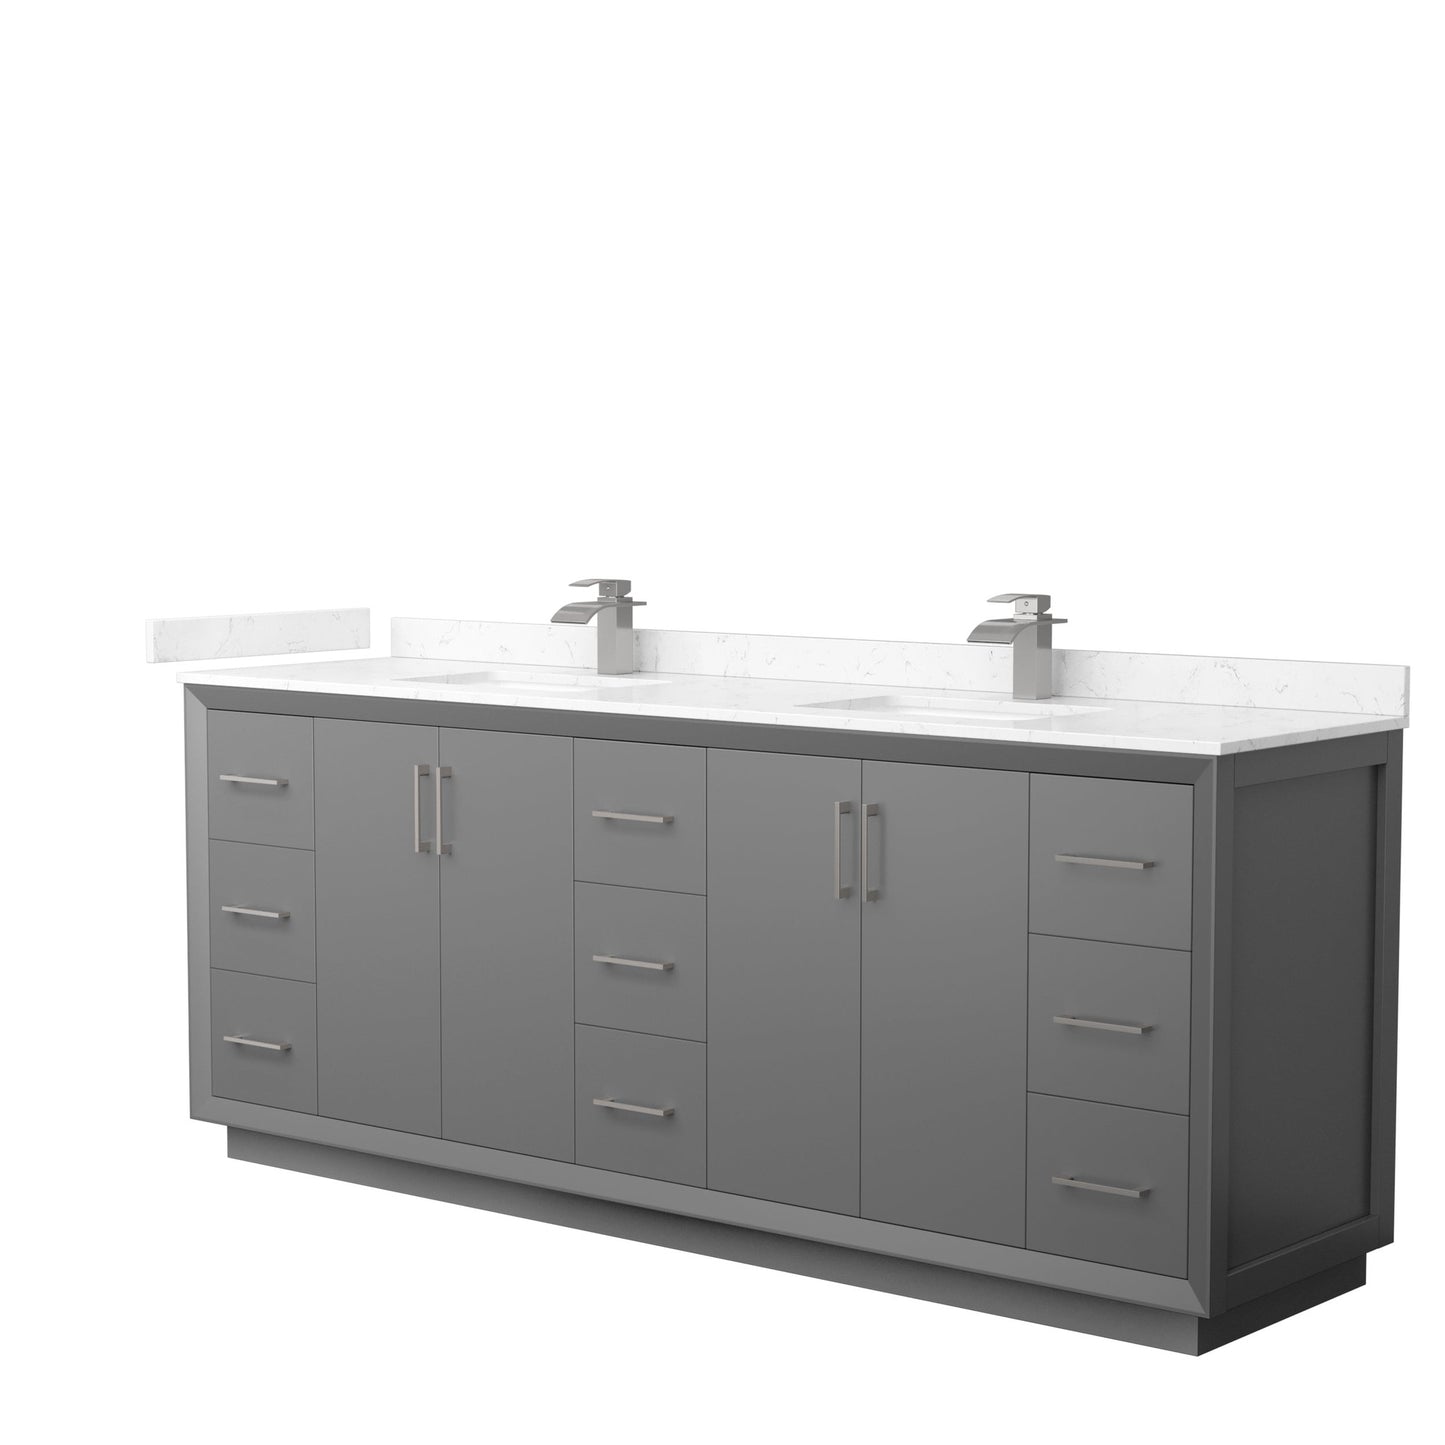 Wyndham Collection Strada 84" Double Bathroom Vanity in Dark Gray, Carrara Cultured Marble Countertop, Undermount Square Sink, Brushed Nickel Trim